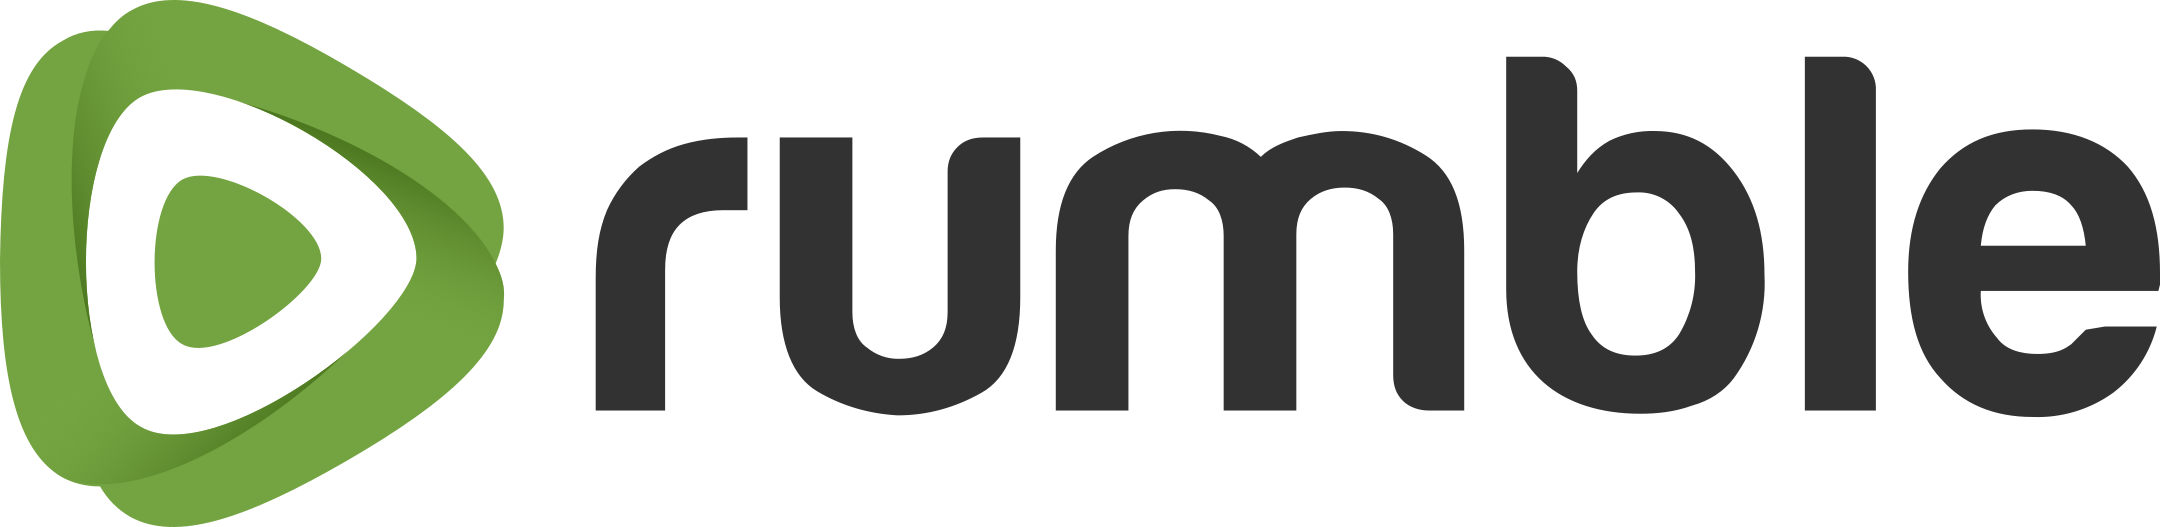 rumble logo 1 - Rumble Logo